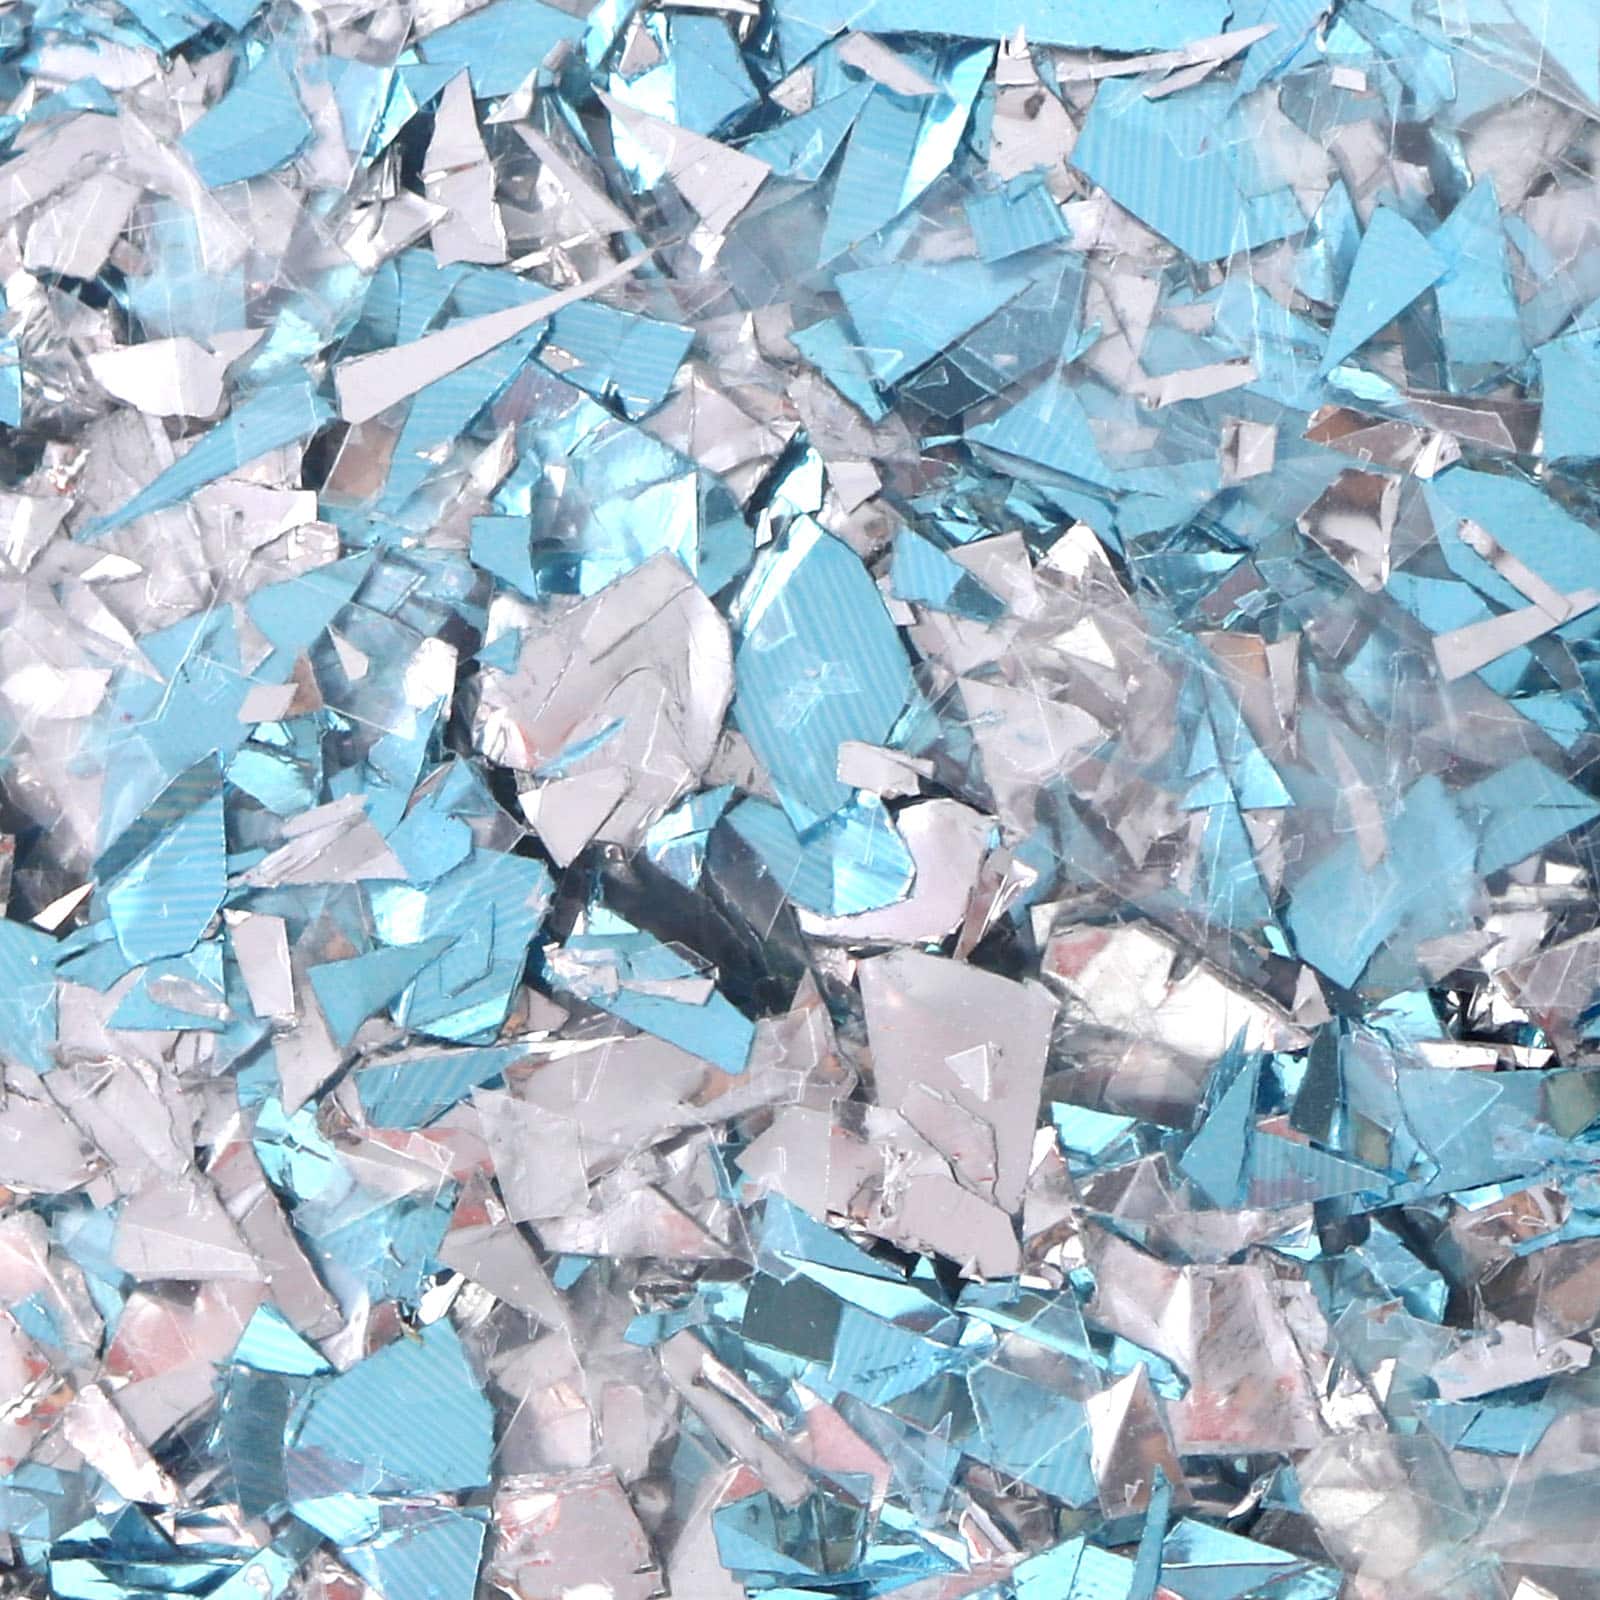 Light Blue &#x26; Silver Confetti Glitter By Creatology&#x2122;